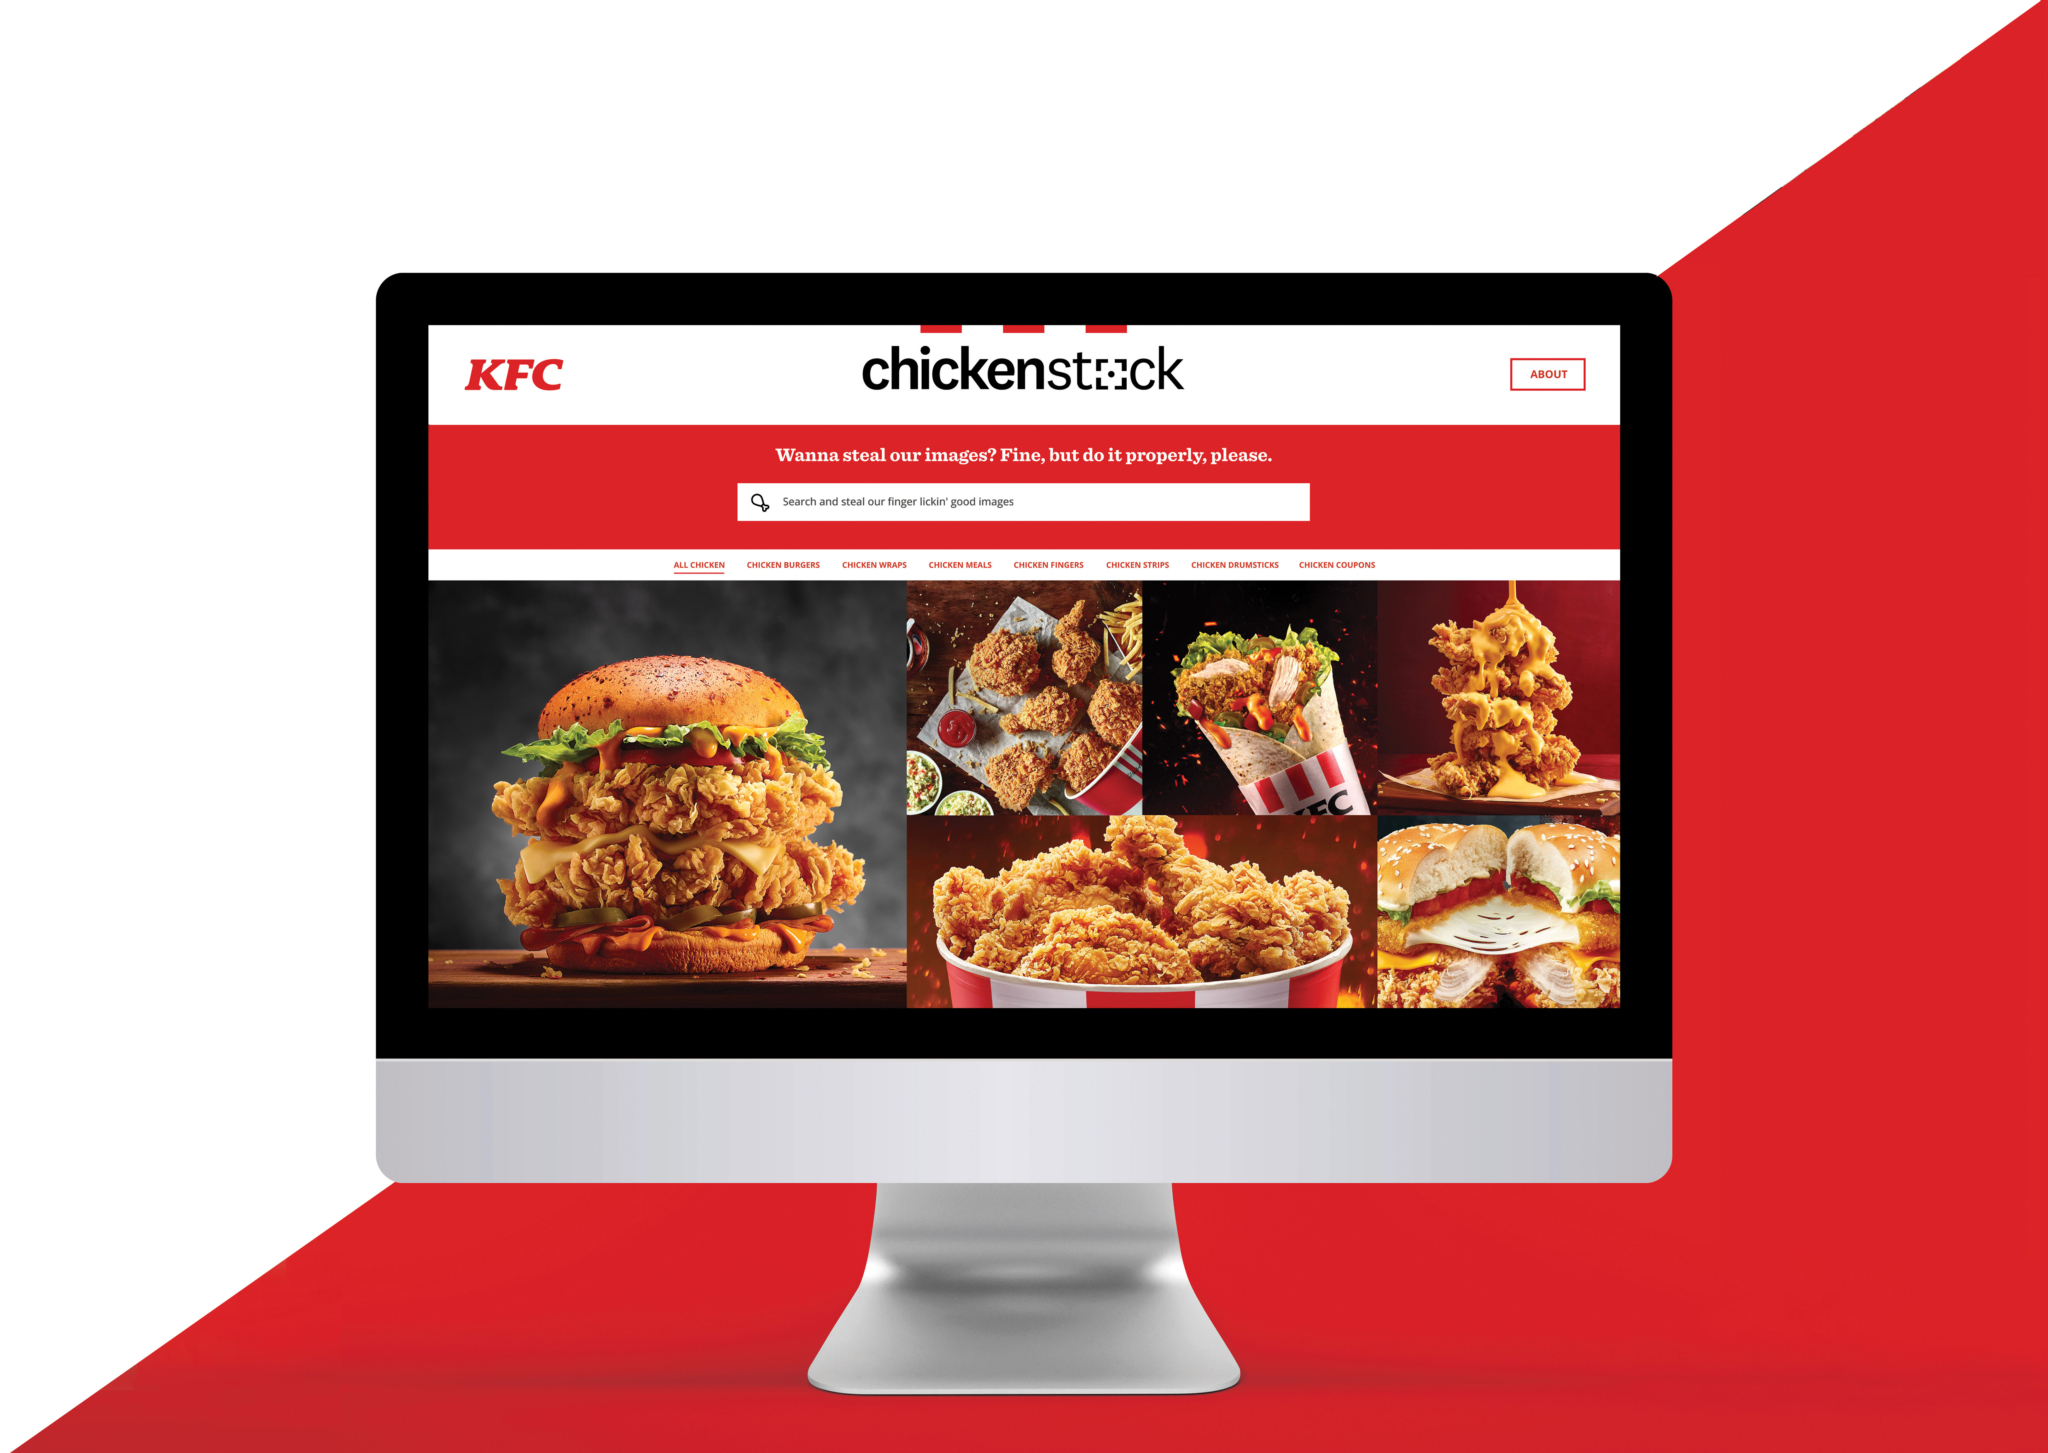 KFCが最大5億画素級の「チキン画像」を無償配布―商品の低解像度流用を問題視